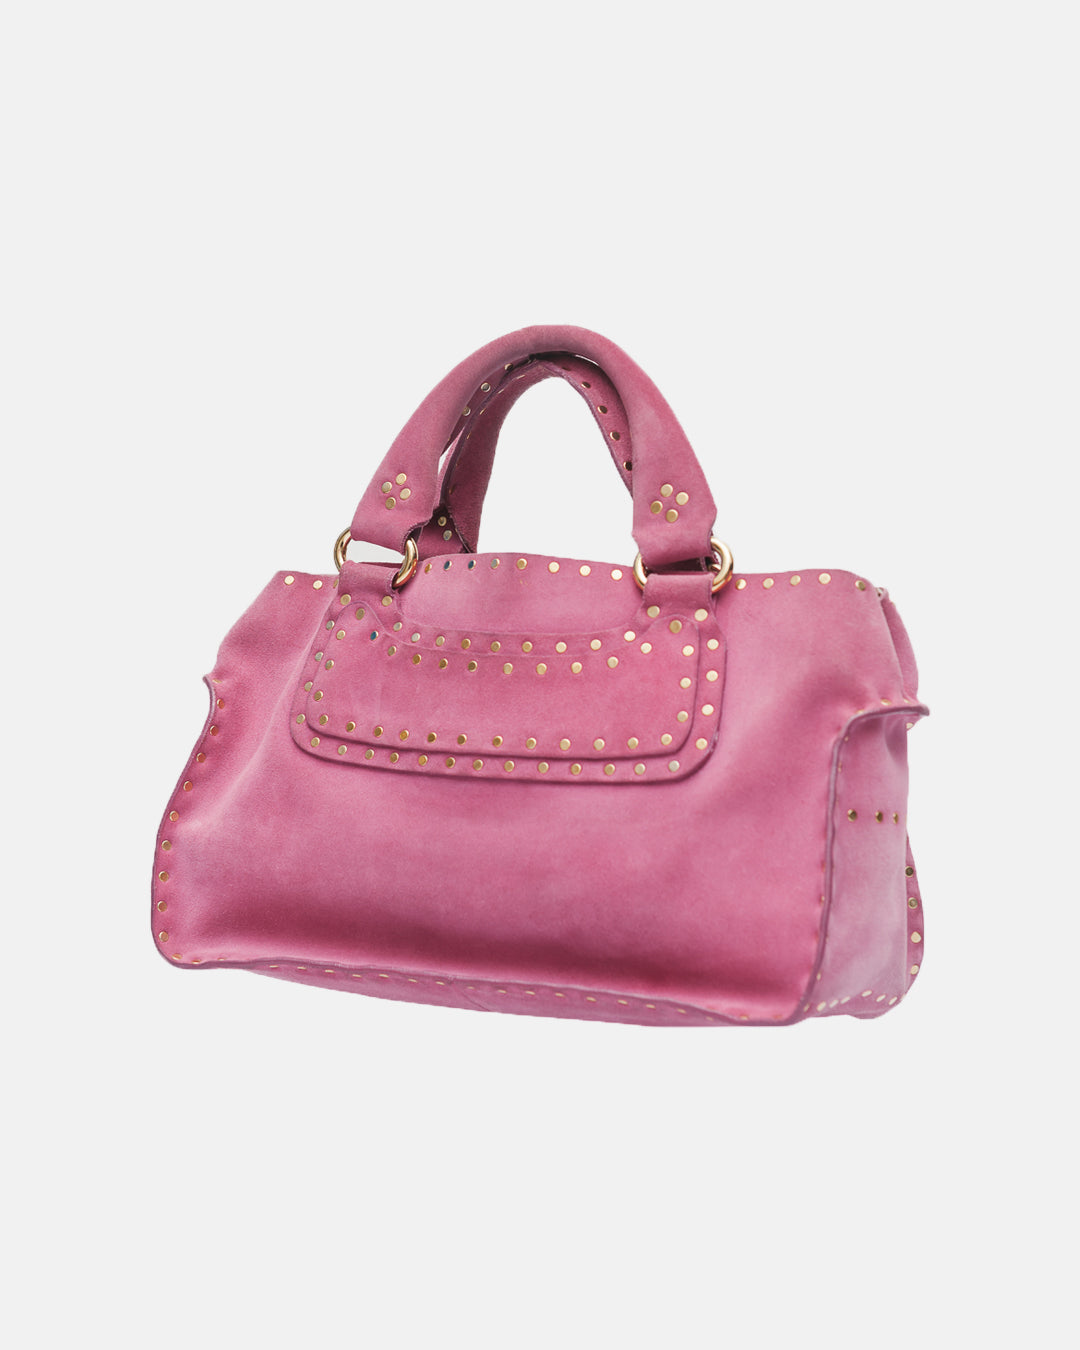 Celine Boogie Handbag in Fuchsia Suede